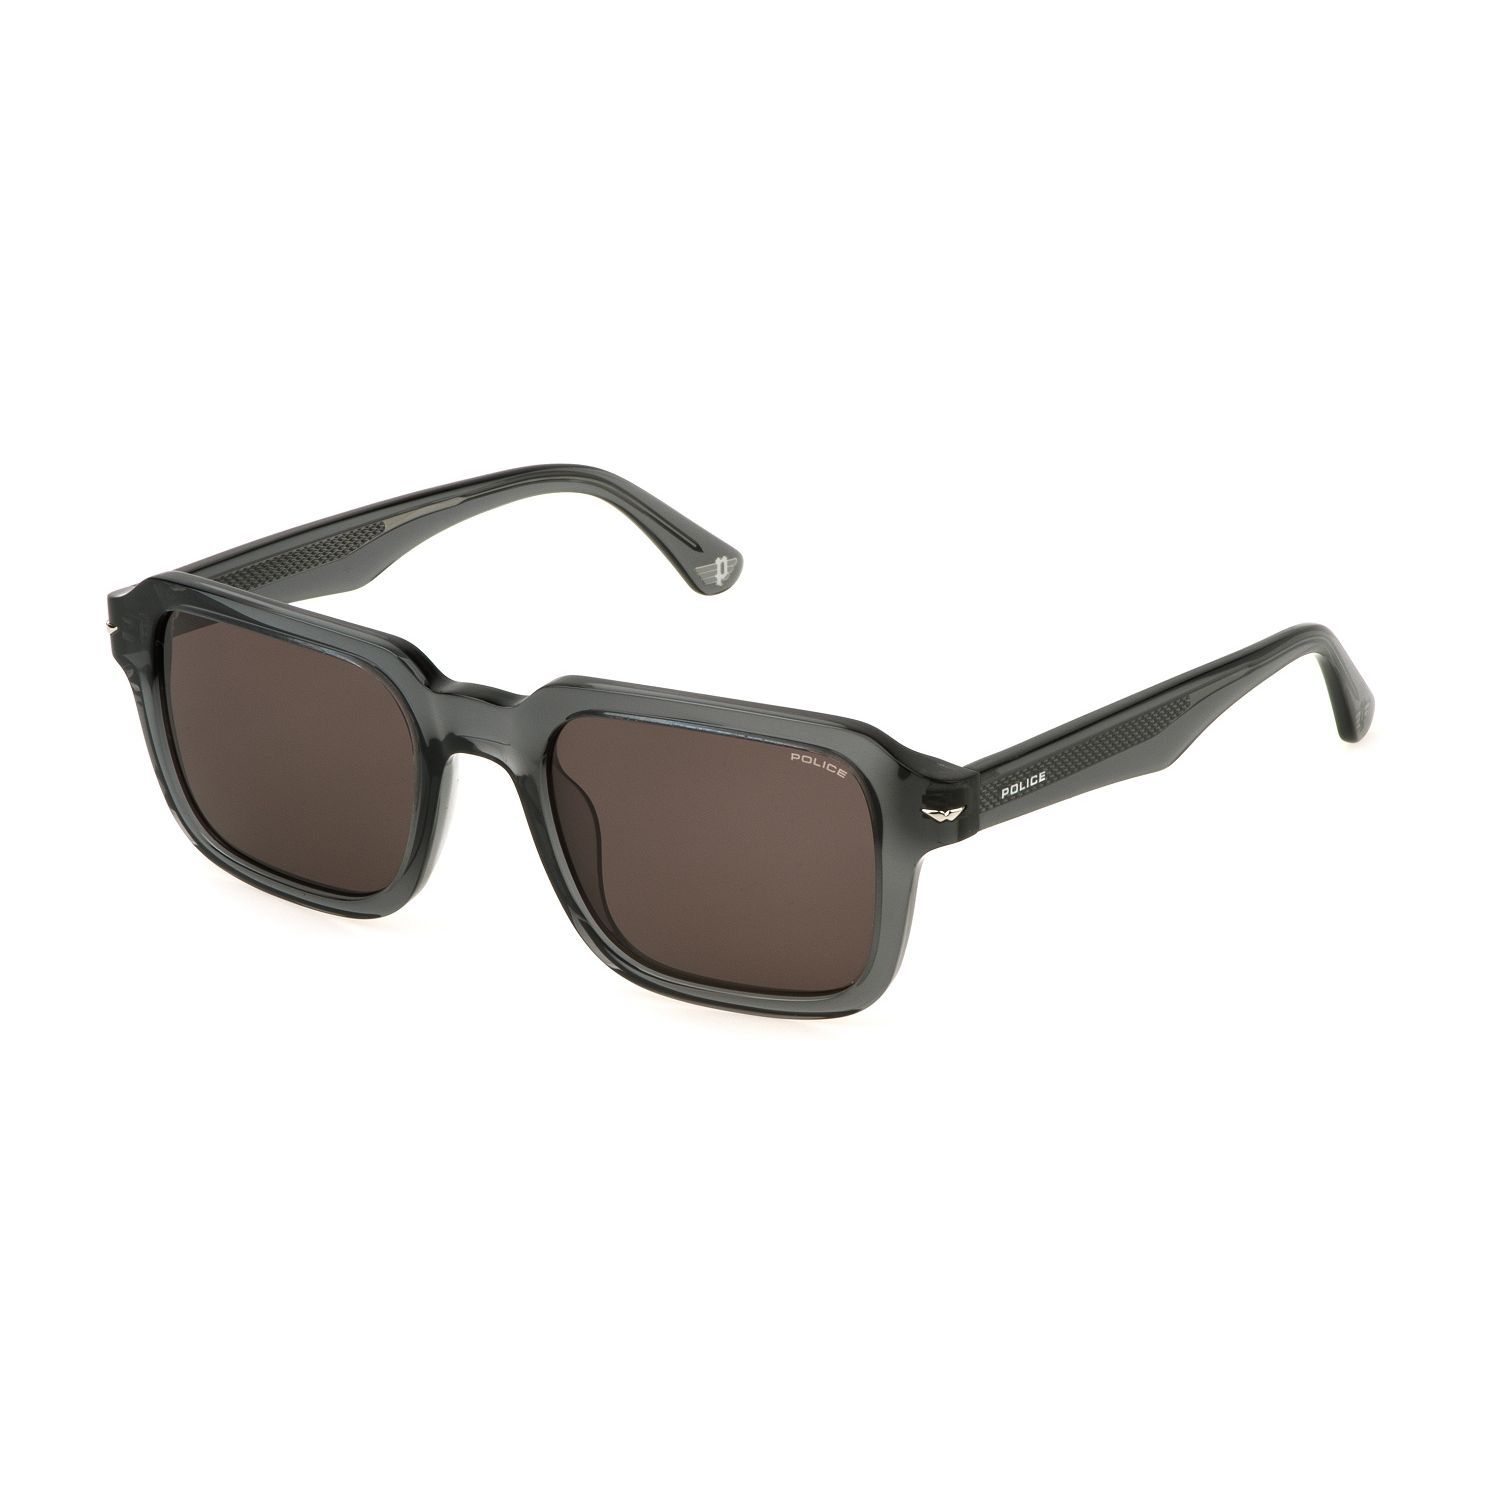 SPLN36M Square Sunglasses 06A7 - size 52